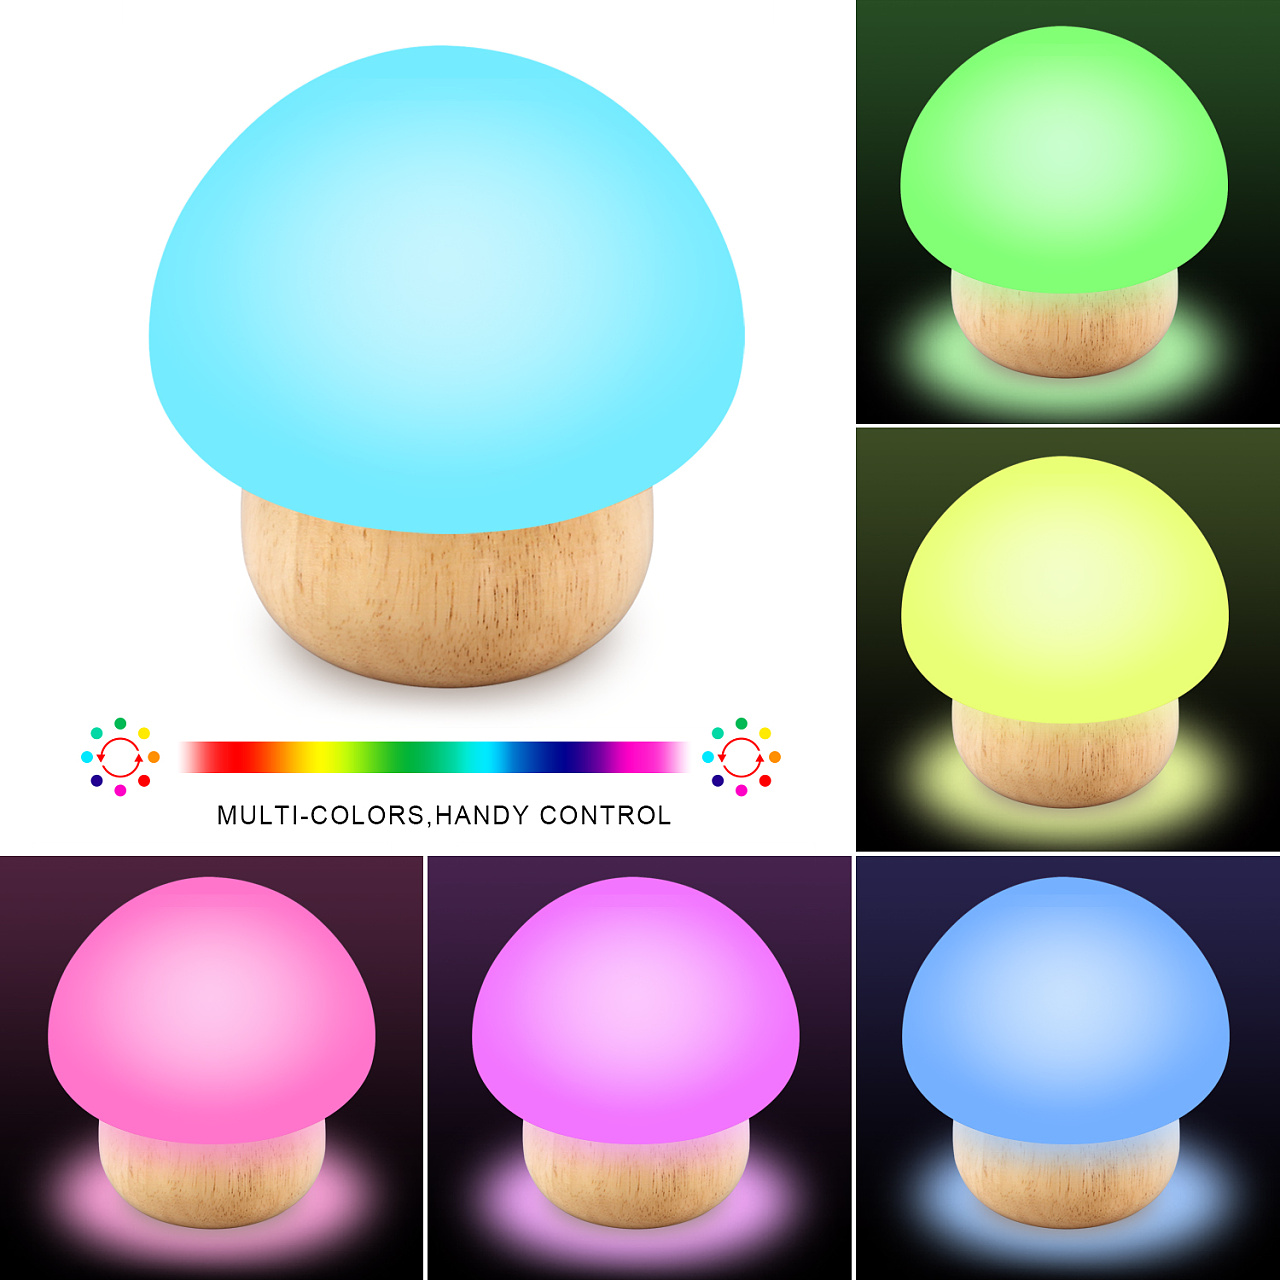 Lexon Mina迷你LED灯是超级可爱的蘑菇形灯 - 普象网